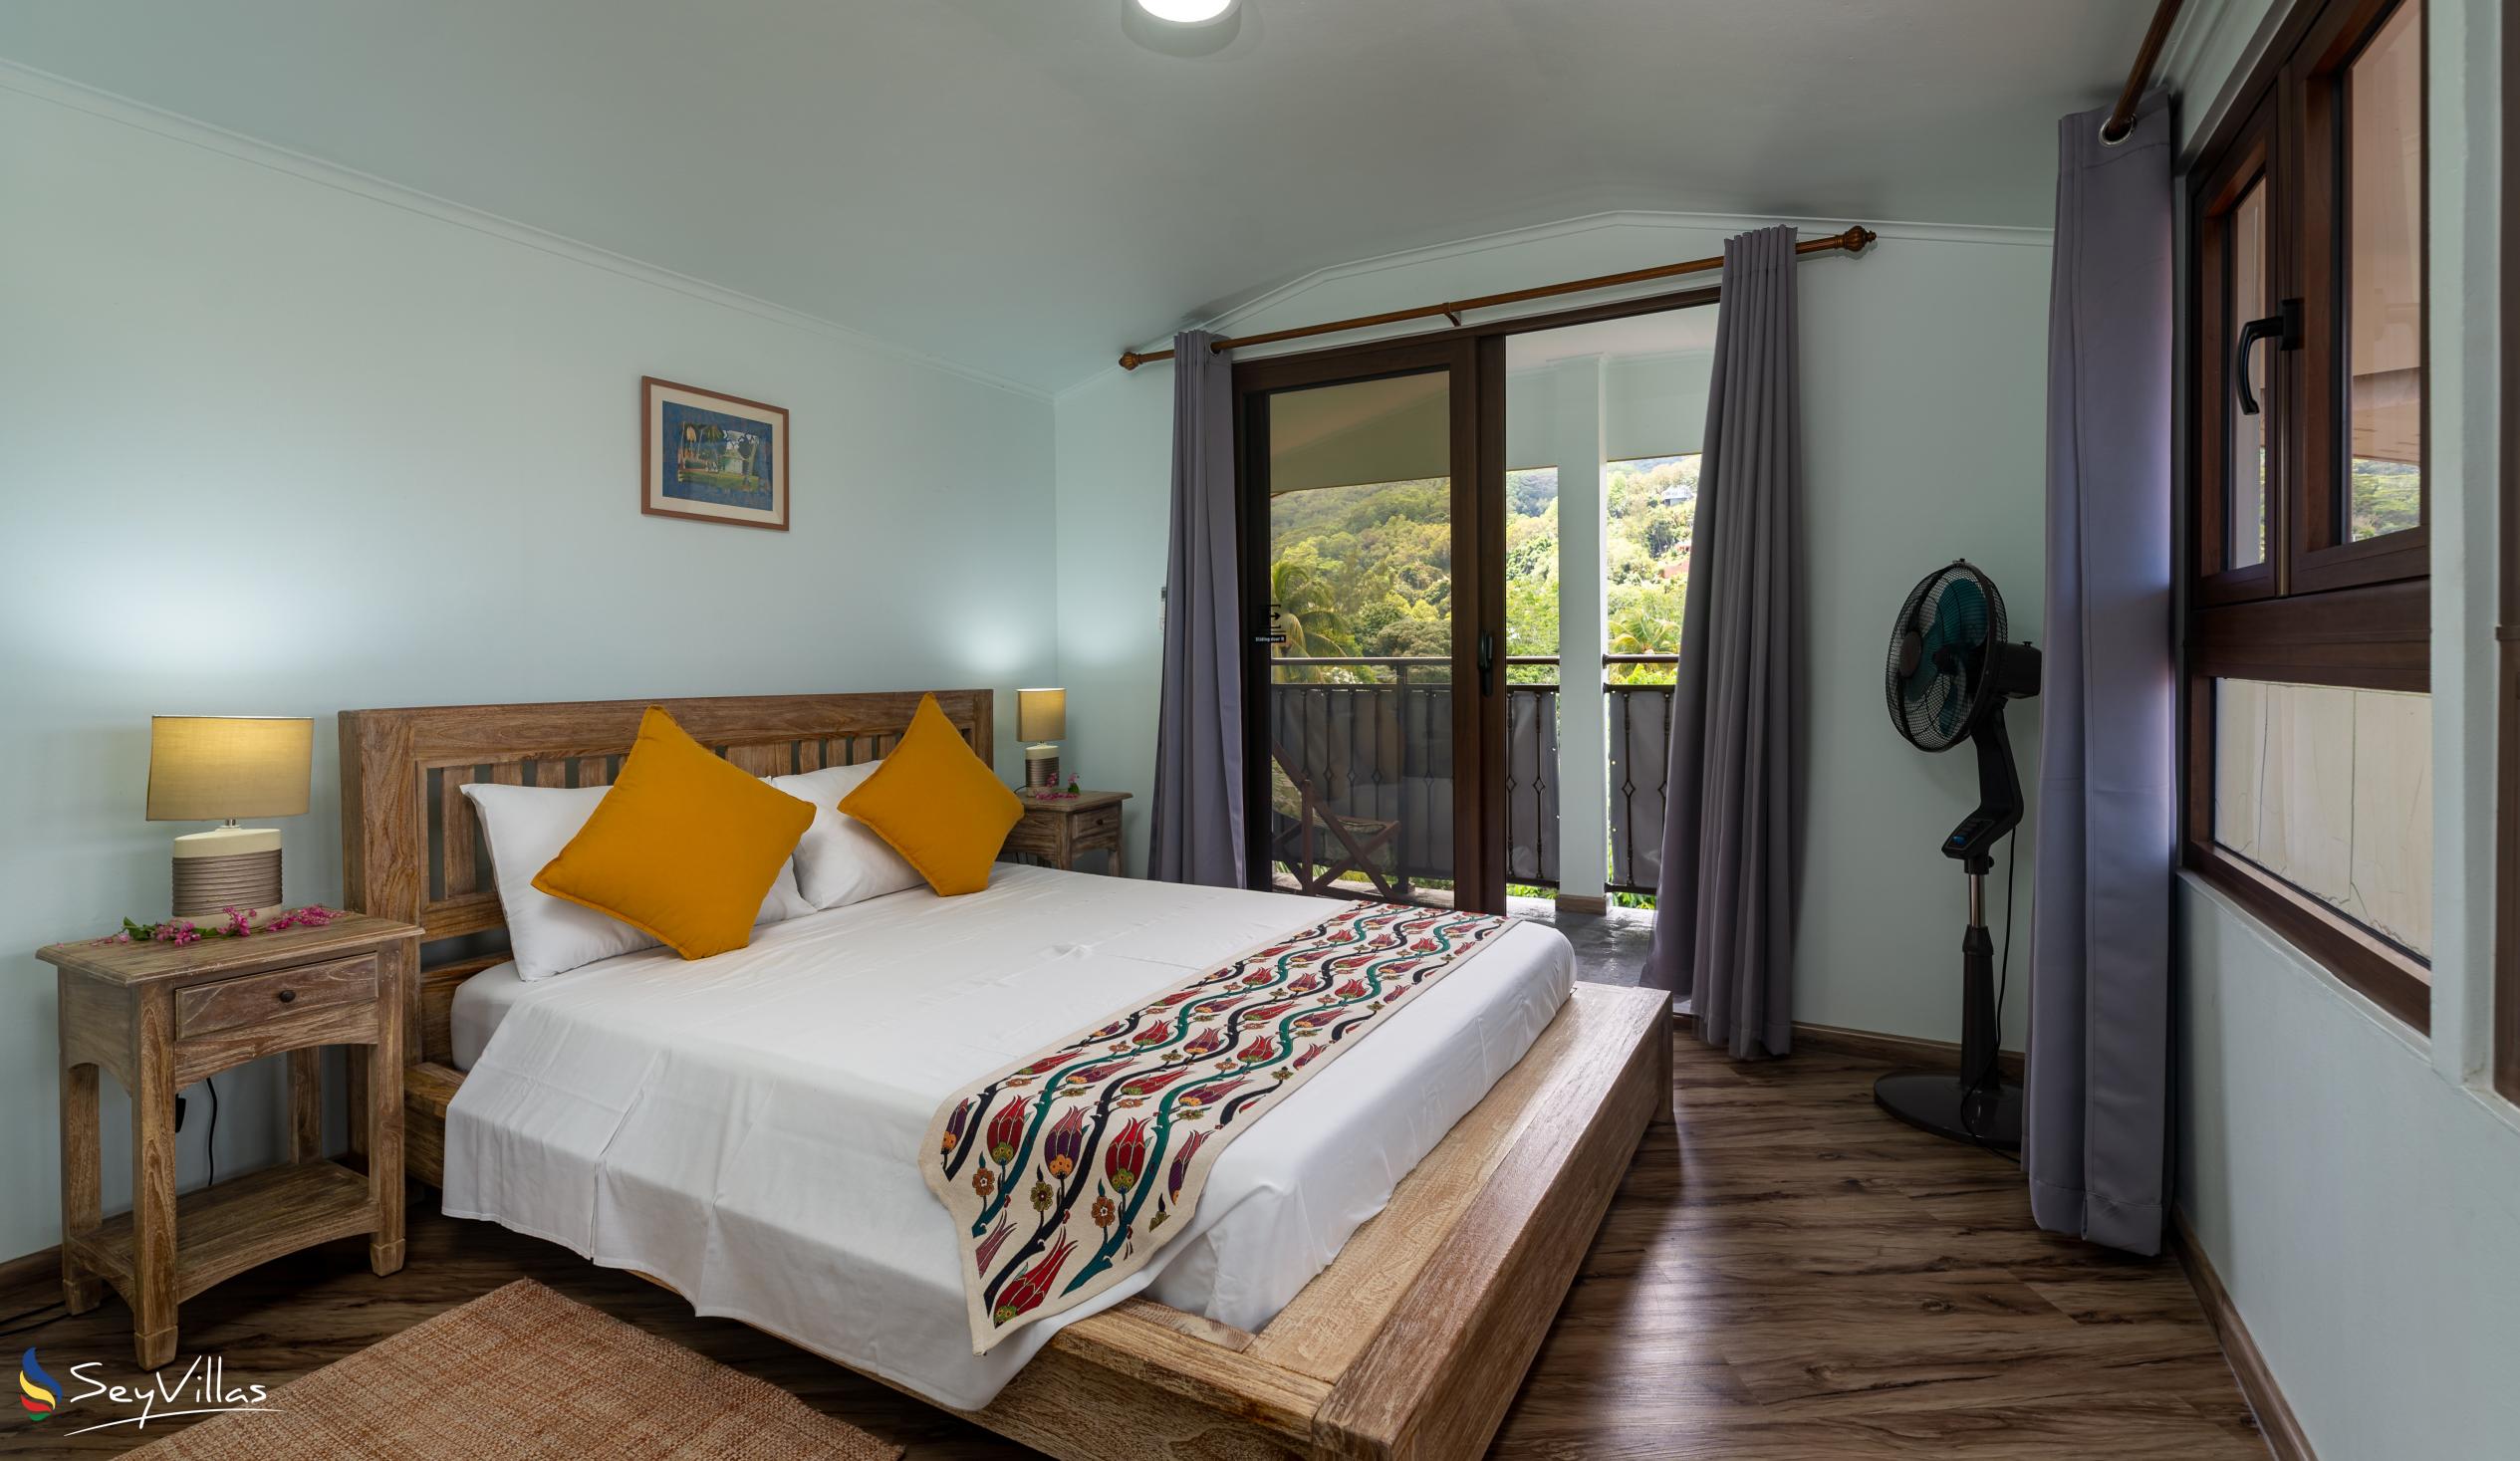 Photo 69: Cap-Sud Self Catering - 3-Bedroom Apartment - Mahé (Seychelles)